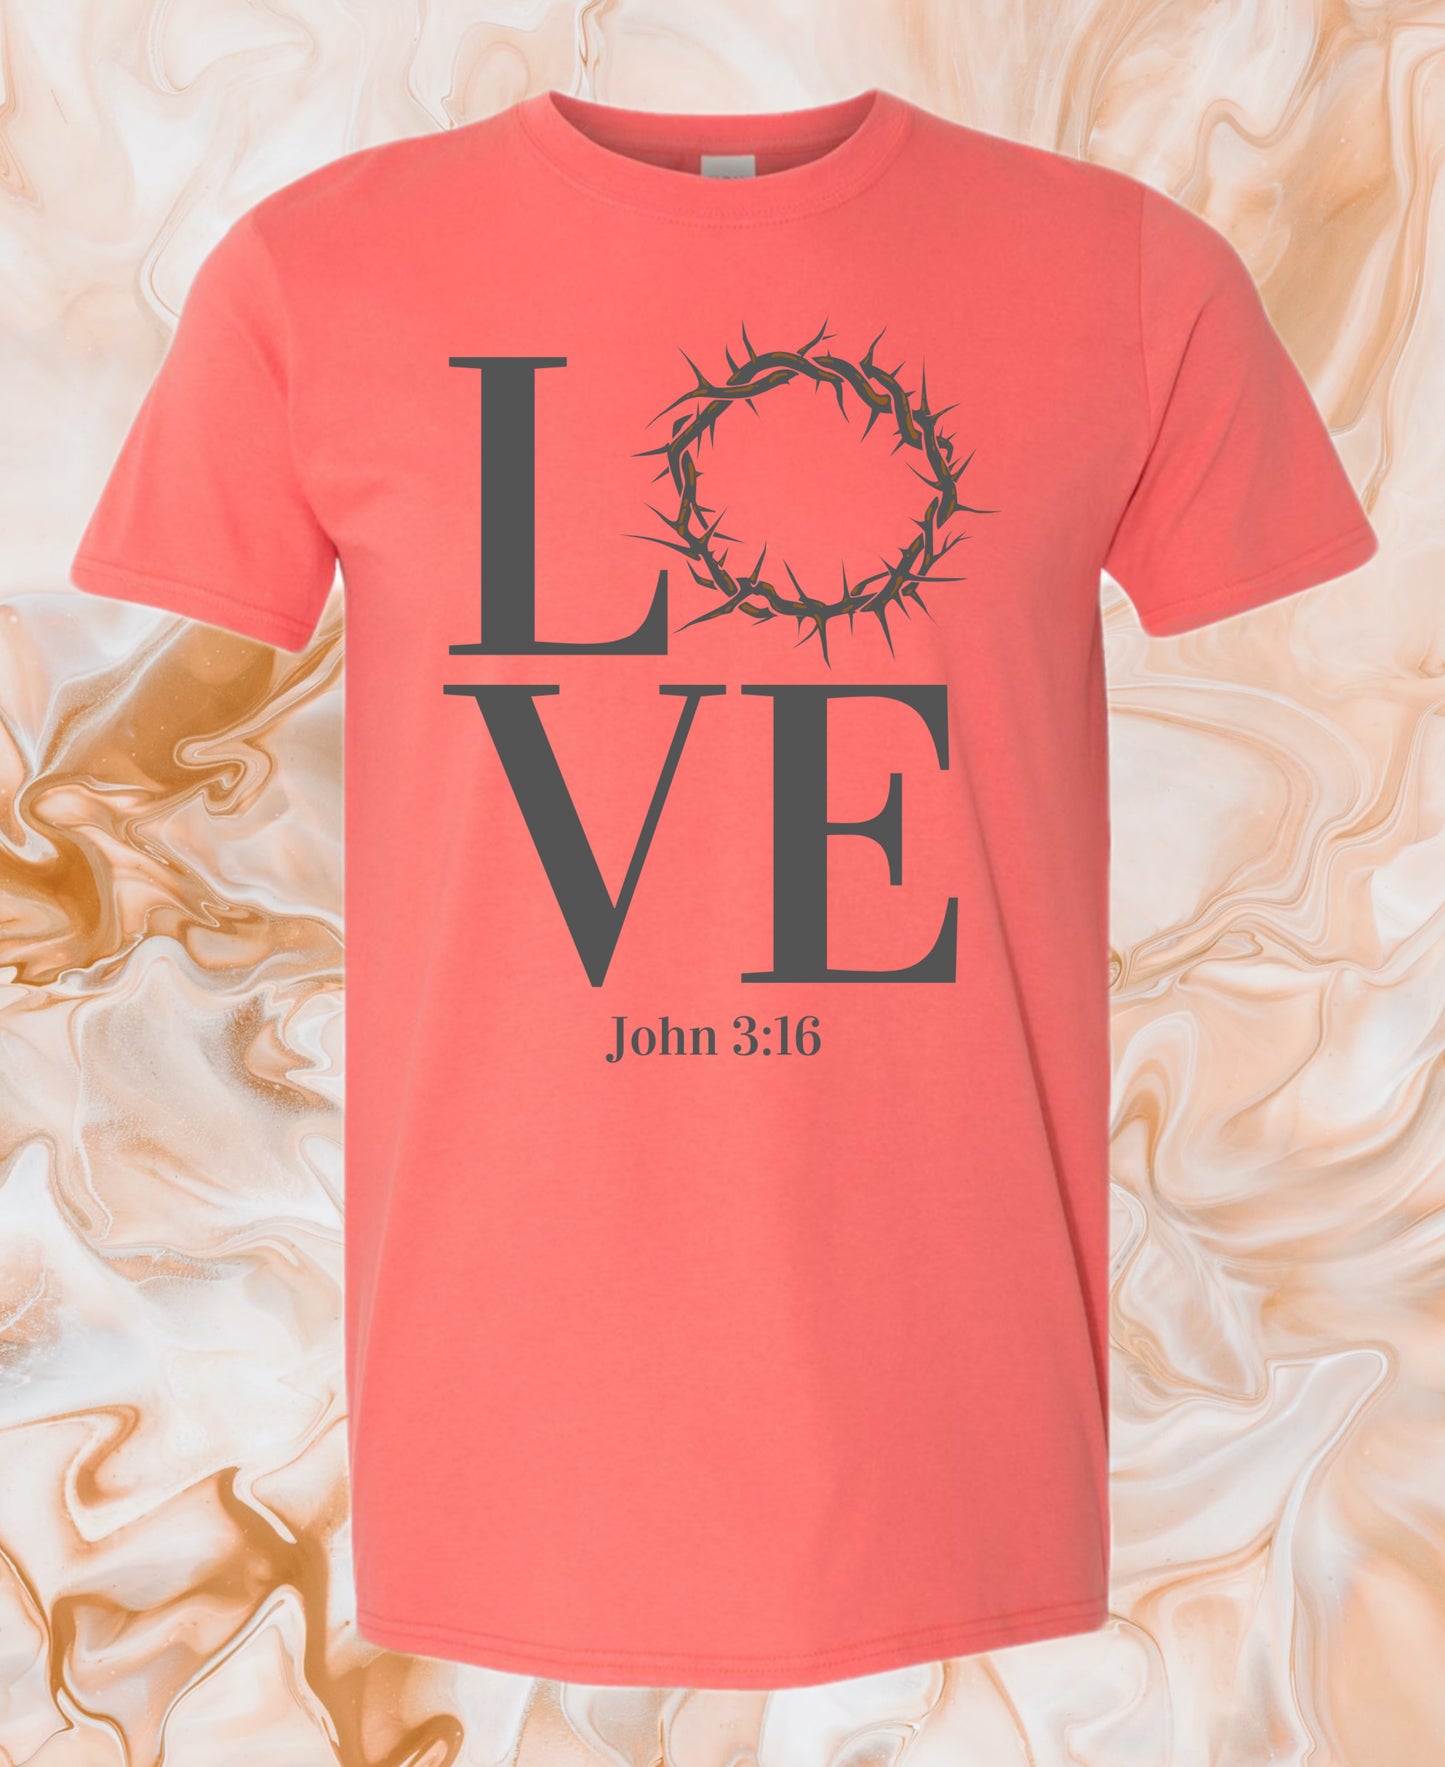 LOVE John 3:16 Tee